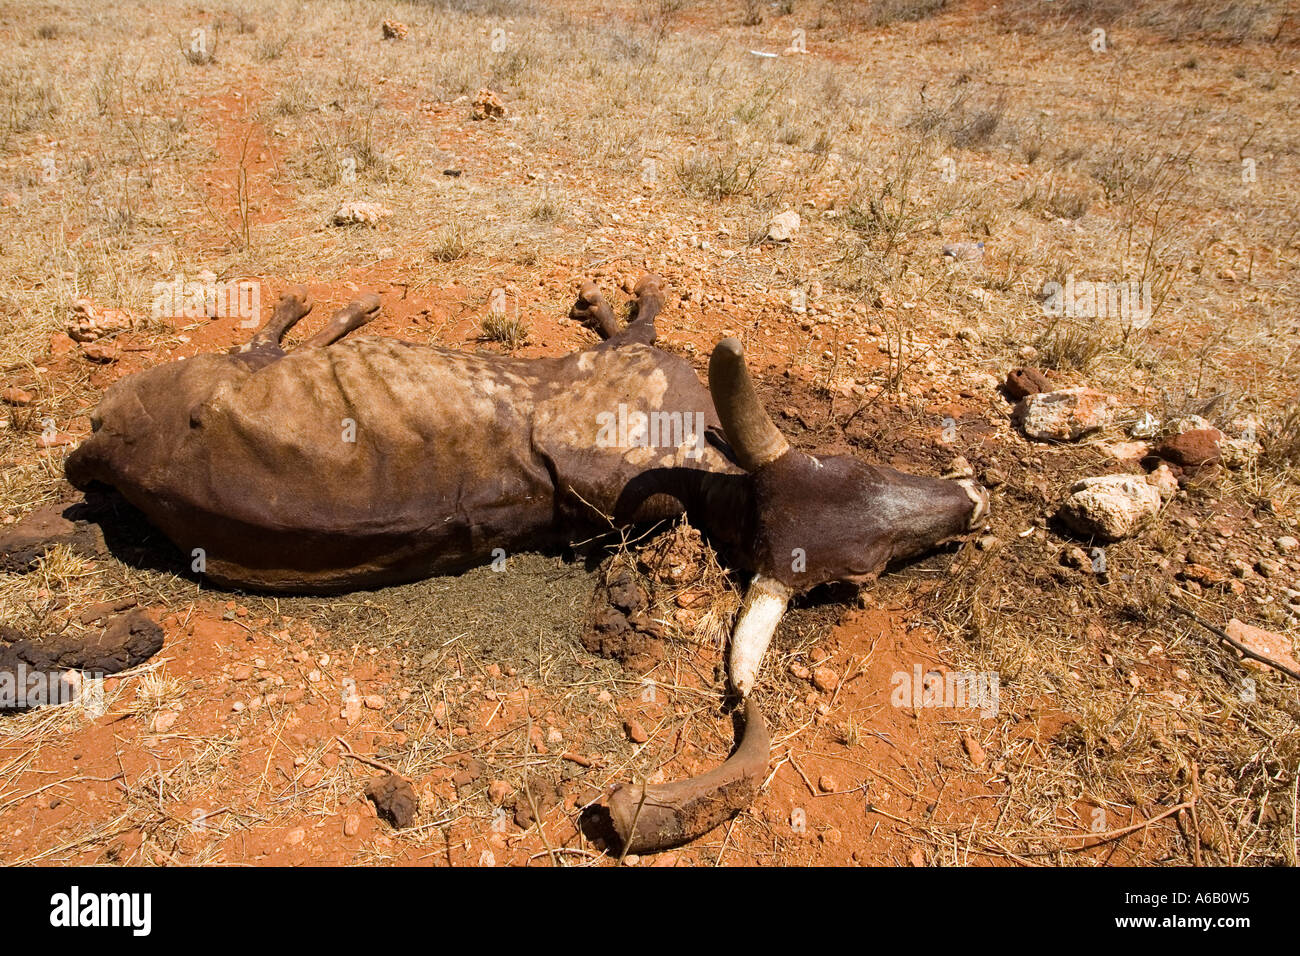 Carcass of dead cow in drought region near Voi Kenya Stock Photo